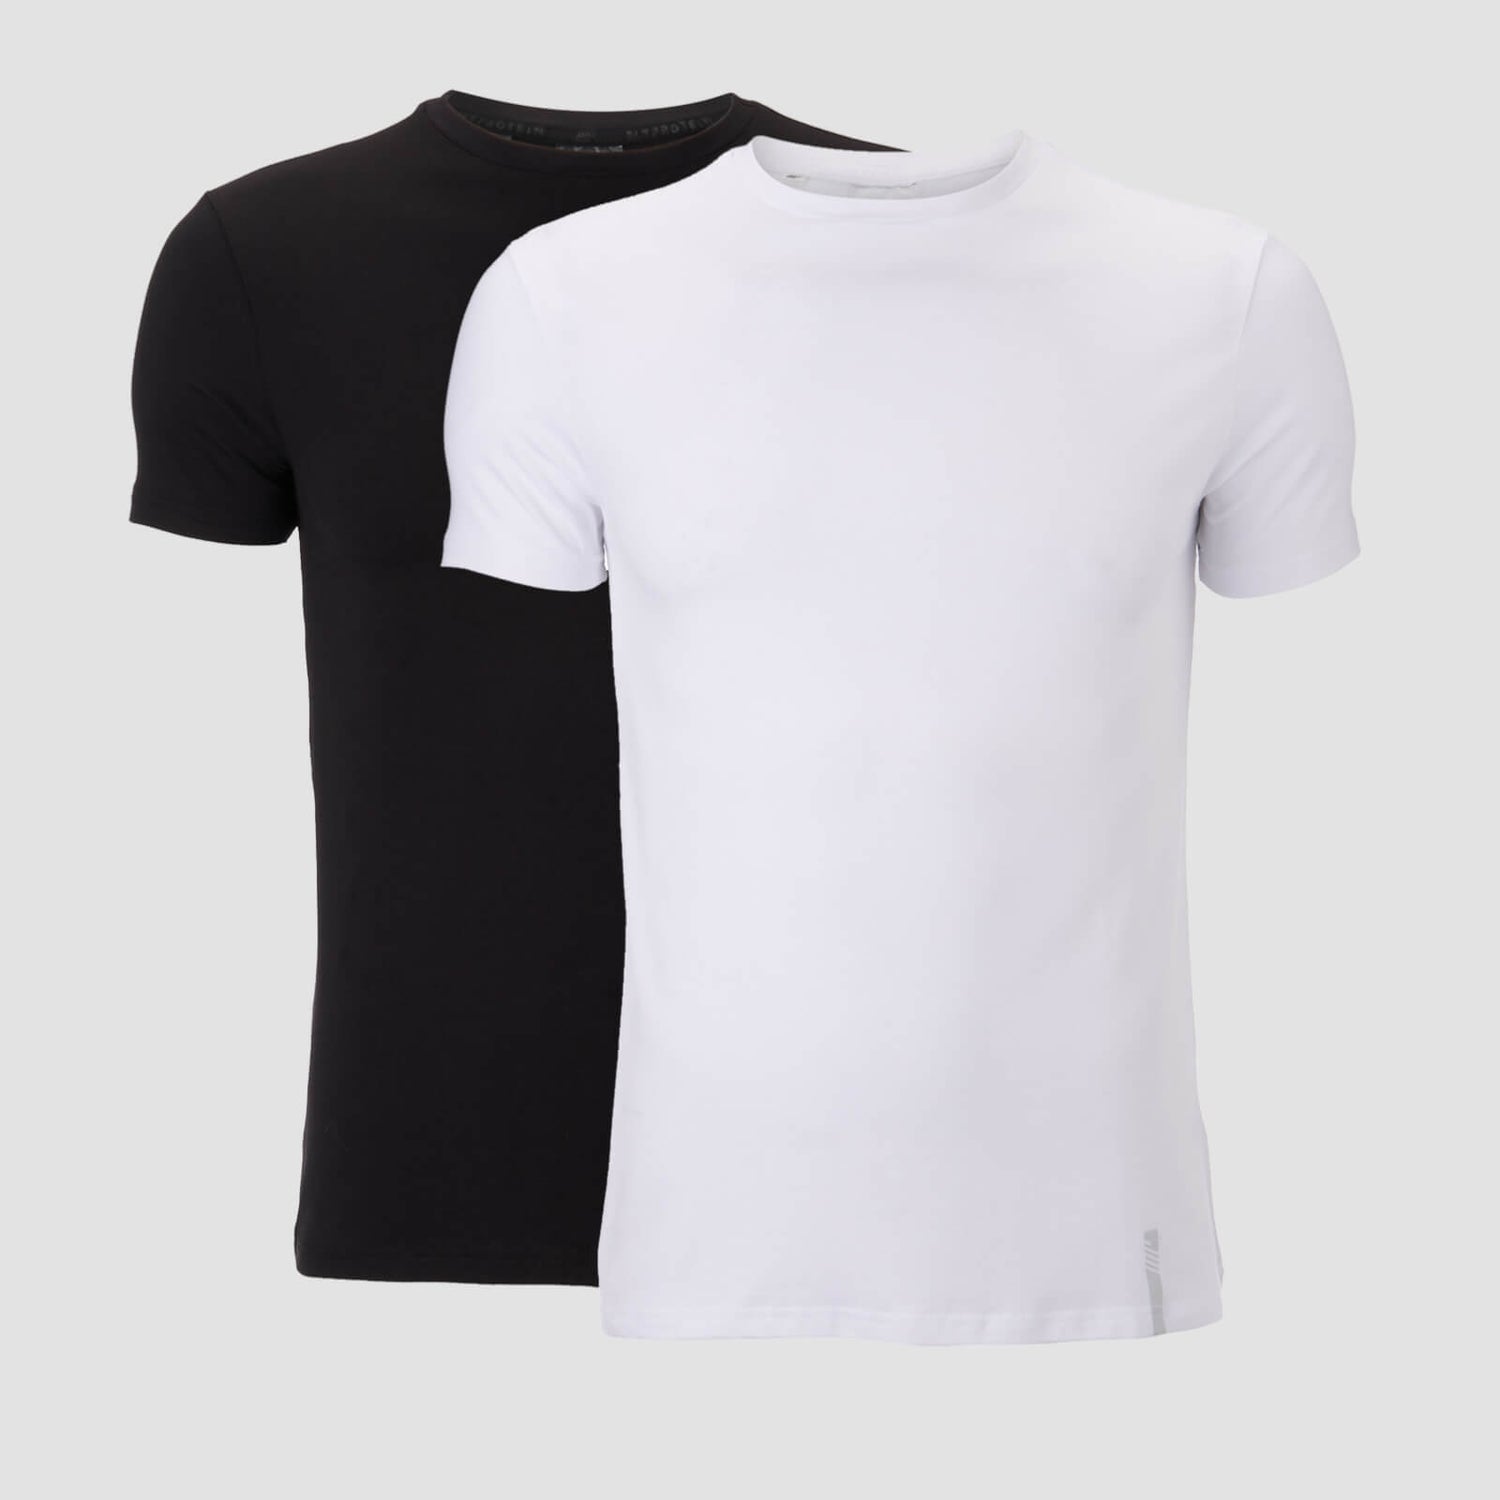 MP muška luksuzna klasična majica s posadom - Black/White (2 pakovanja) - XS